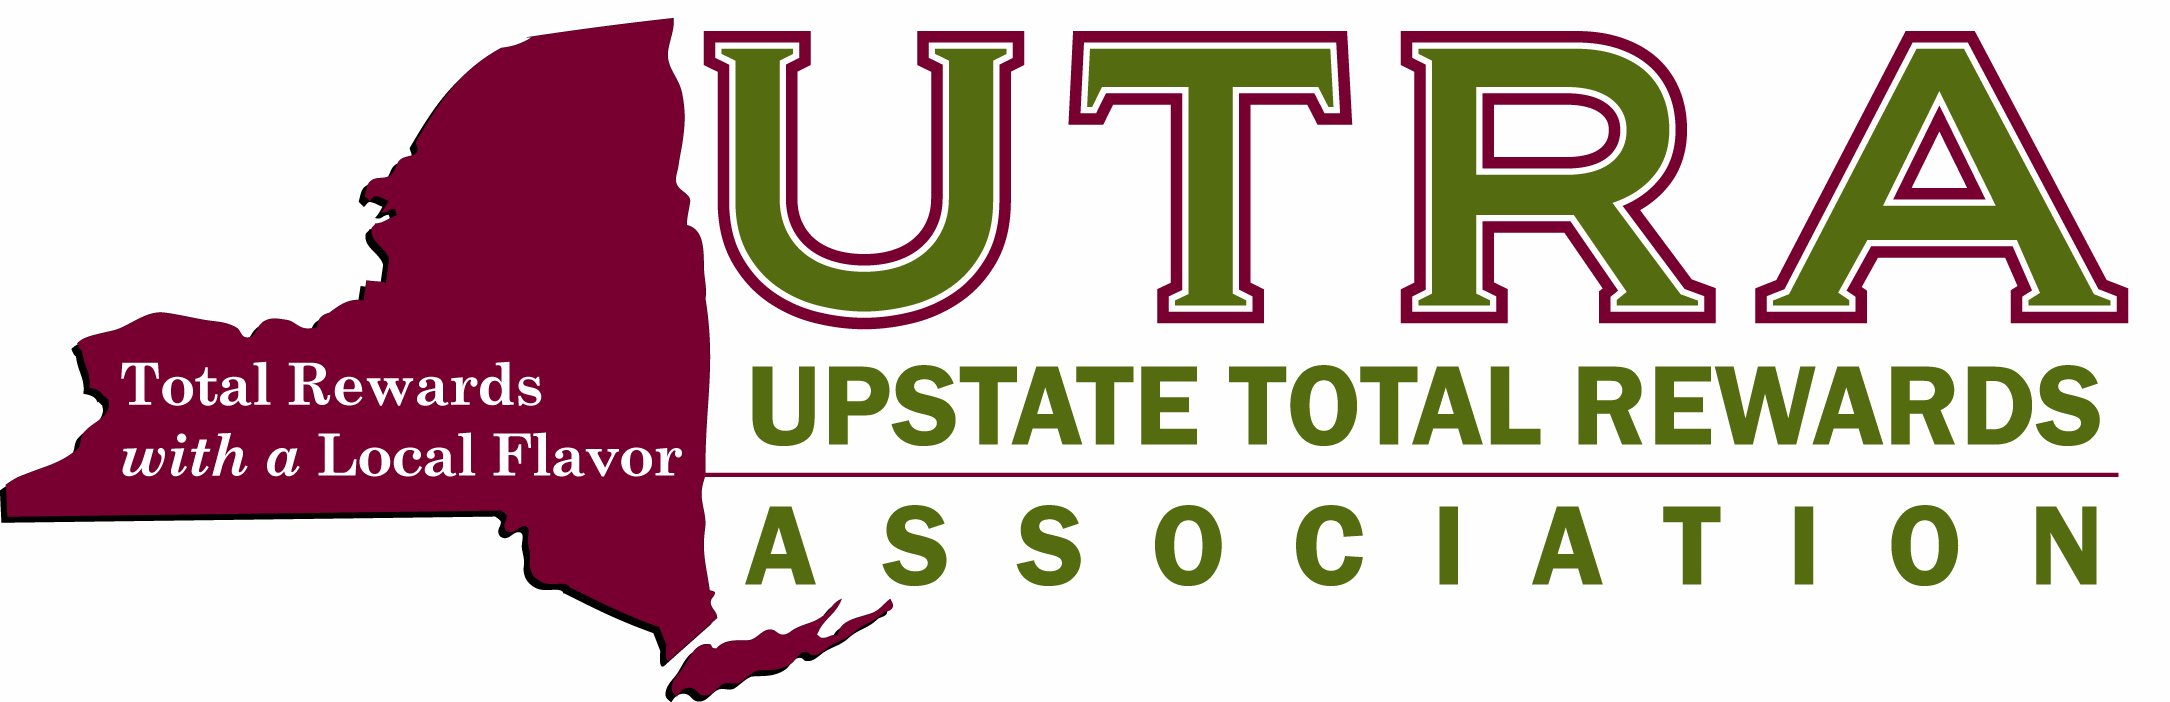 Upstate Total Rewards Association